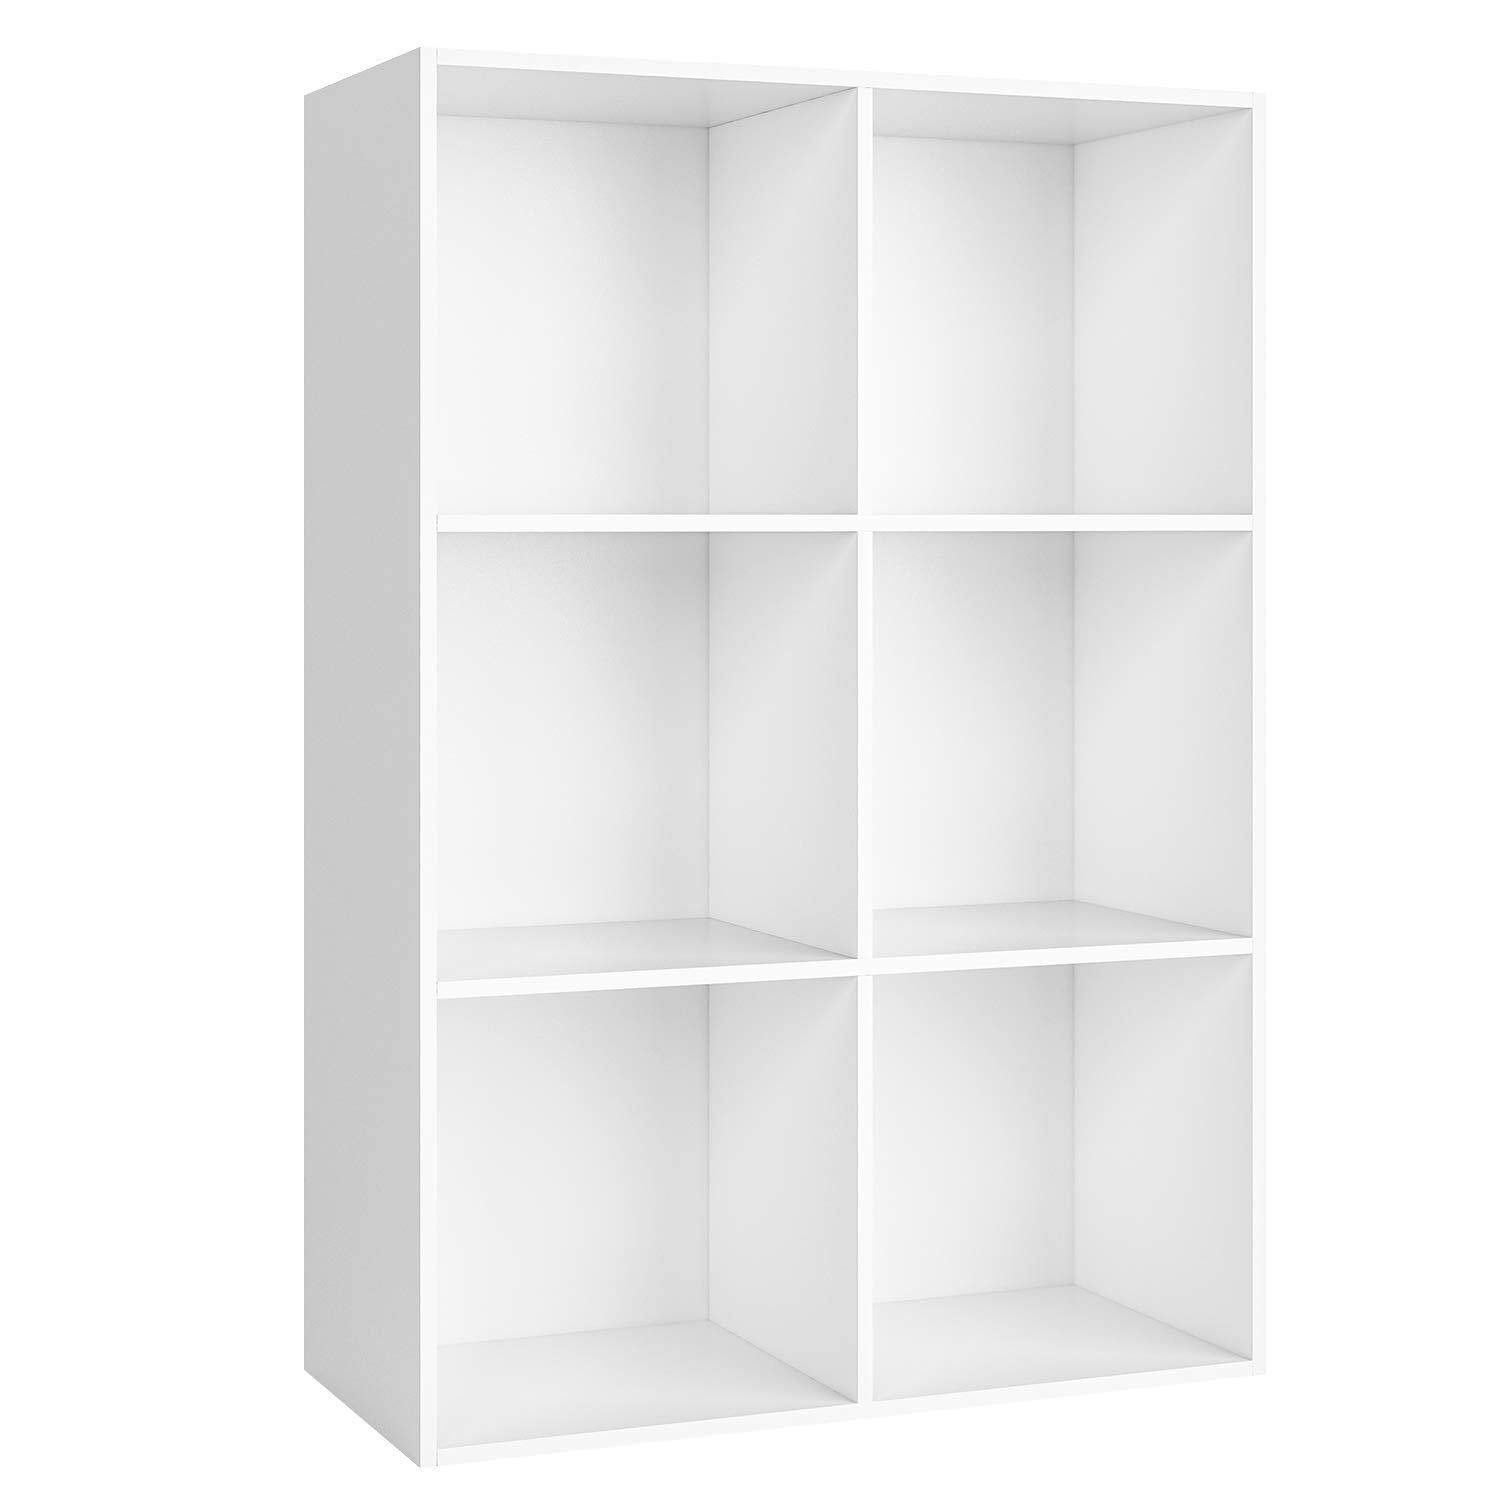 Librería Estantería con 6 Cubos Estantería de Pared Blanco 69.5 * 25.5 * 96.5cm